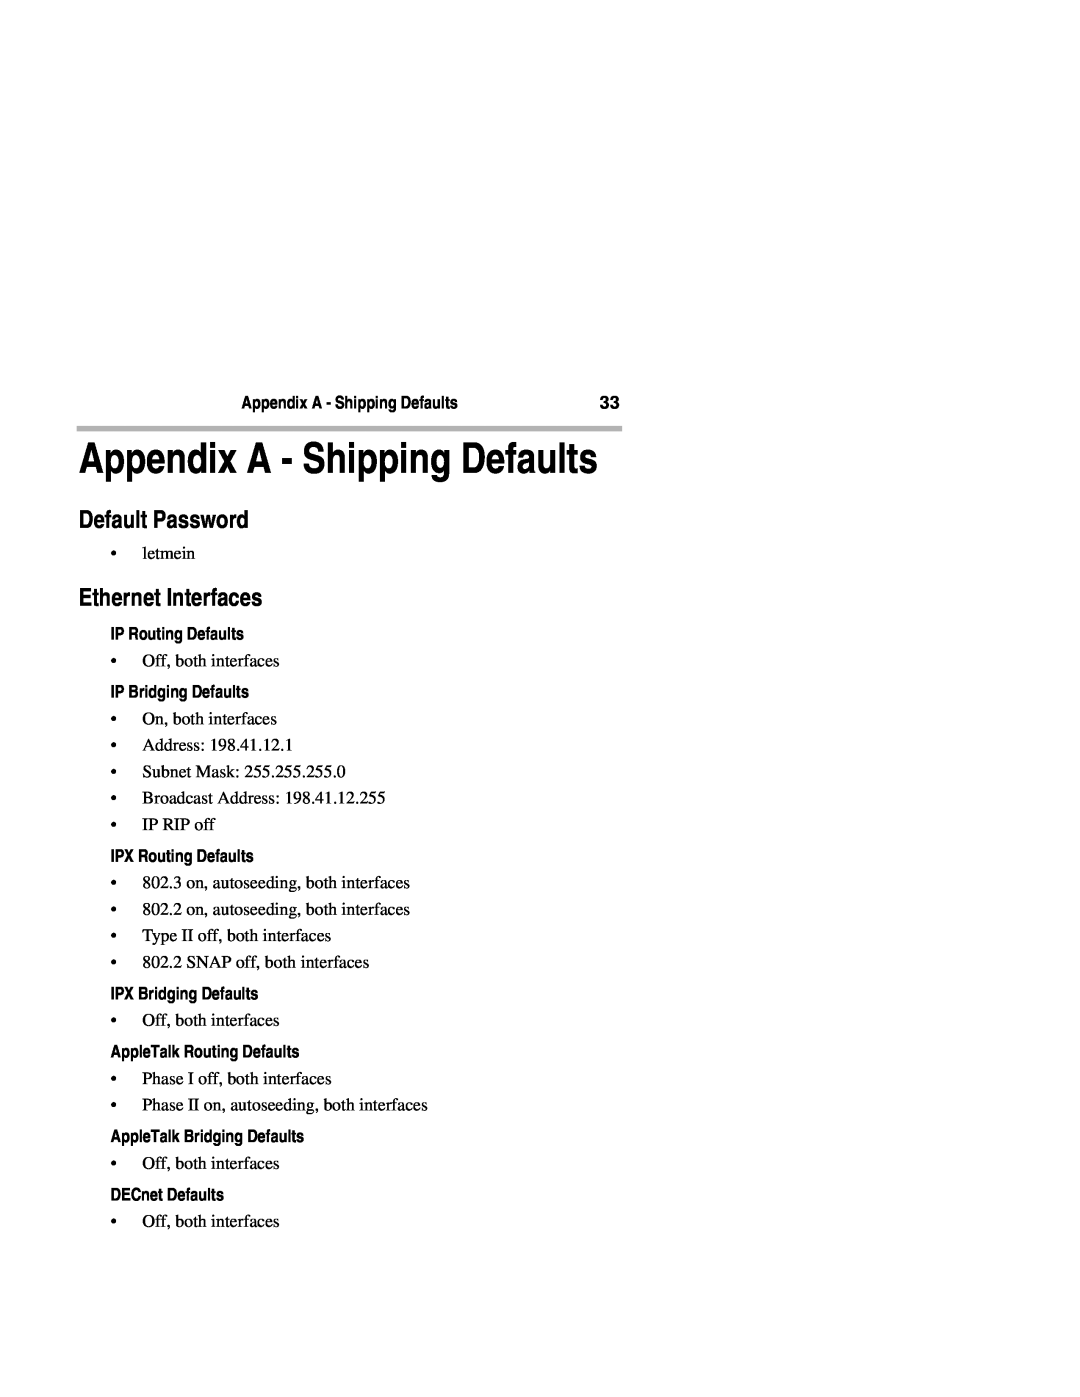 Compatible Systems 2270R manual Appendix A - Shipping Defaults, Default Password, Ethernet Interfaces, IP Routing Defaults 